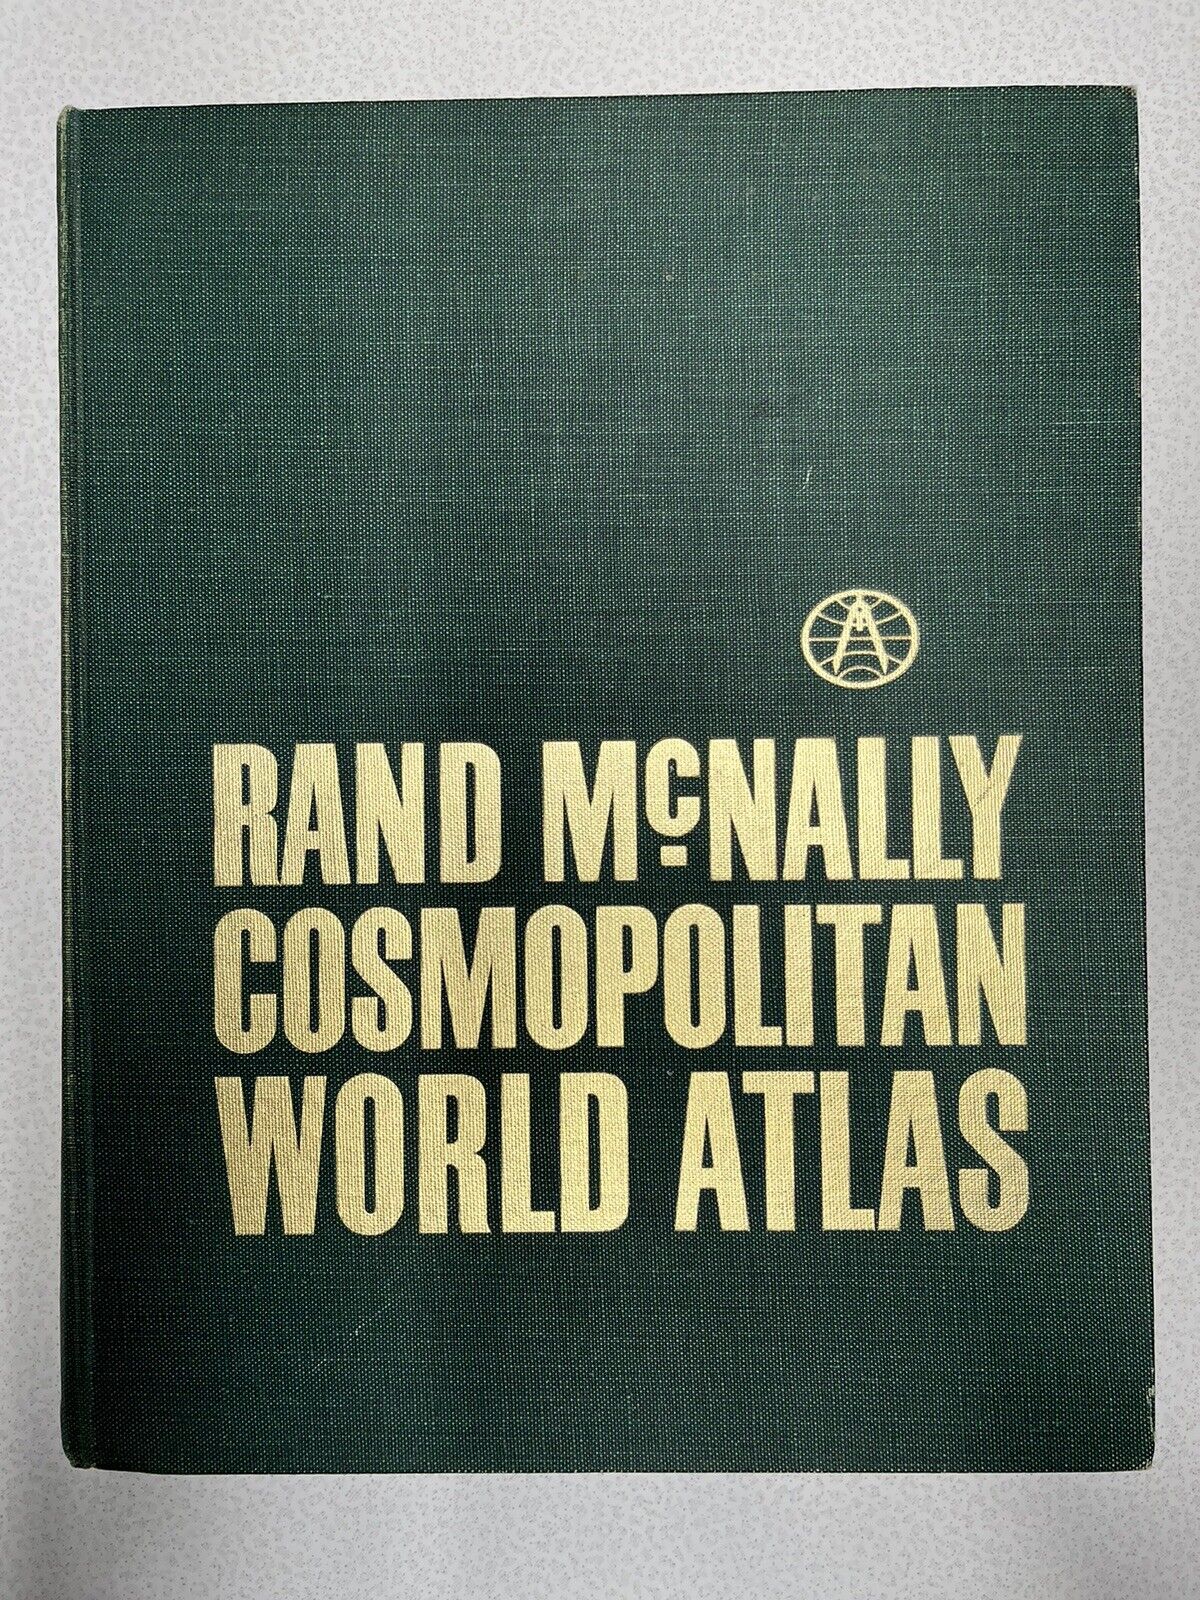 Vintage 1962 Rand McNally Cosmopolitan World Atlas Hard-Cover Large